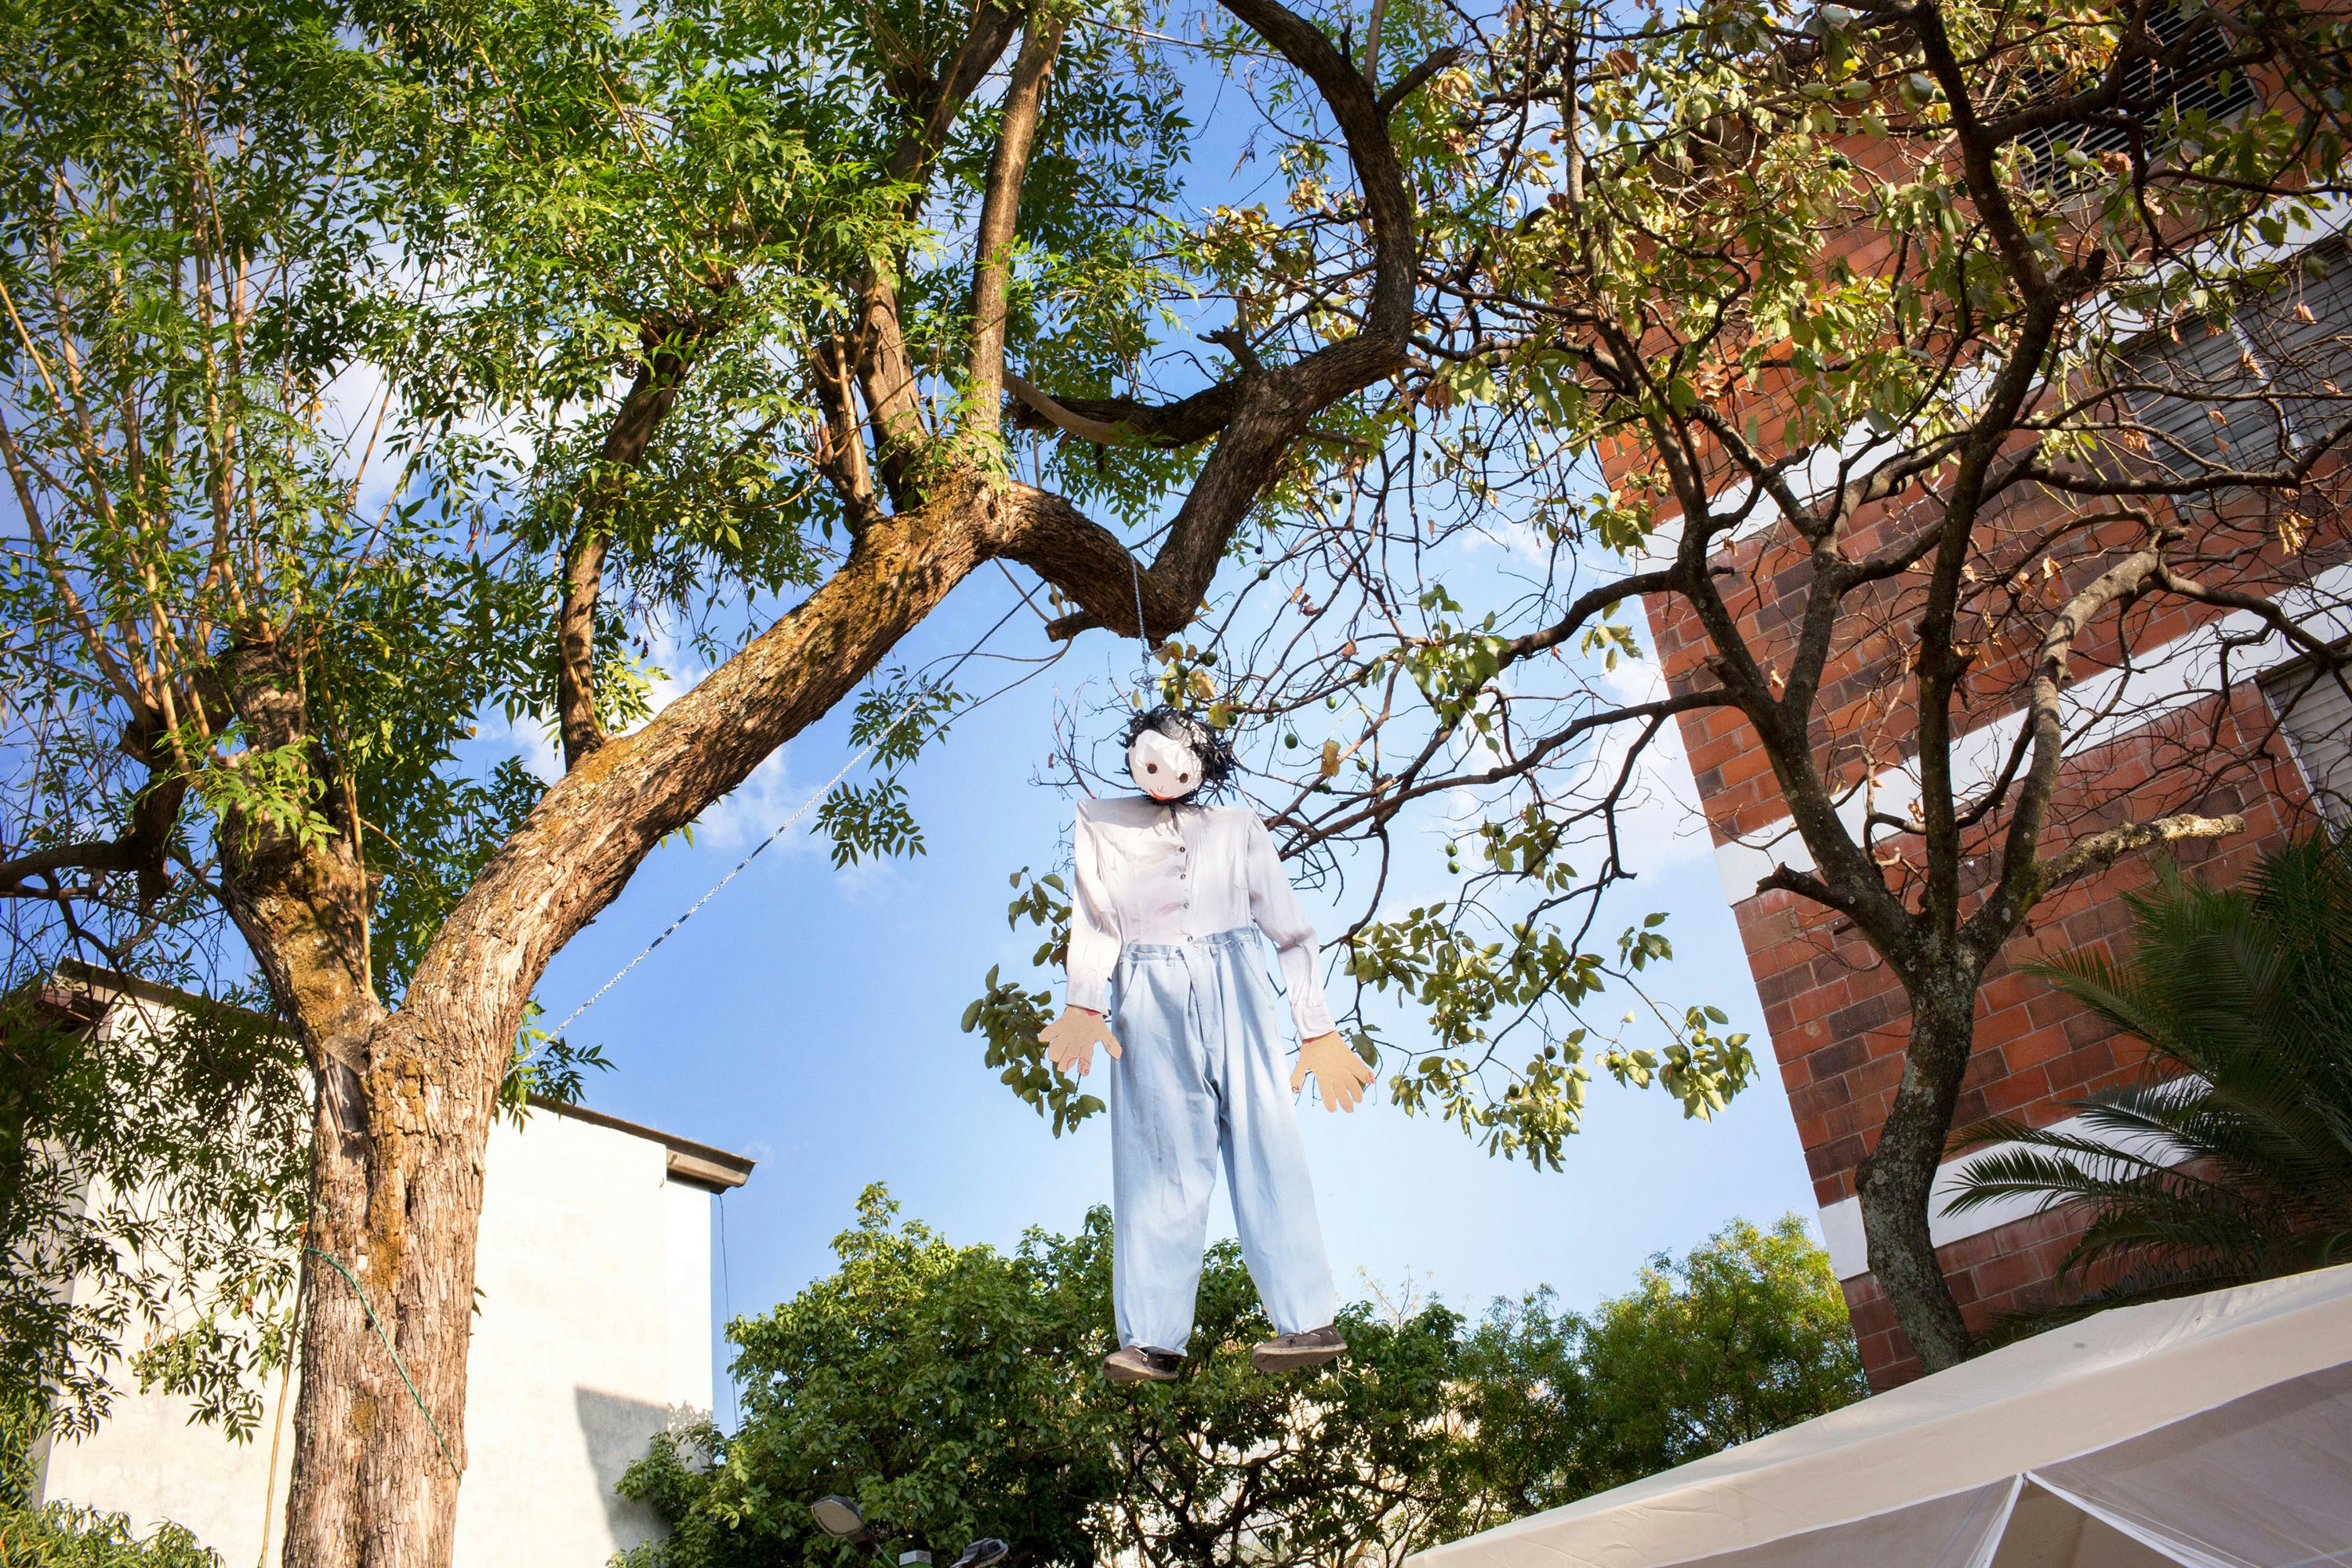 April 2017, El Salvador, San Salvador. An effigy of Judas hangs in the notoriously gang controlled neighborhood of Los Mejicanos, in Barrio 18 territory, the night before Easter Sunday. (Natalie Keyssar)